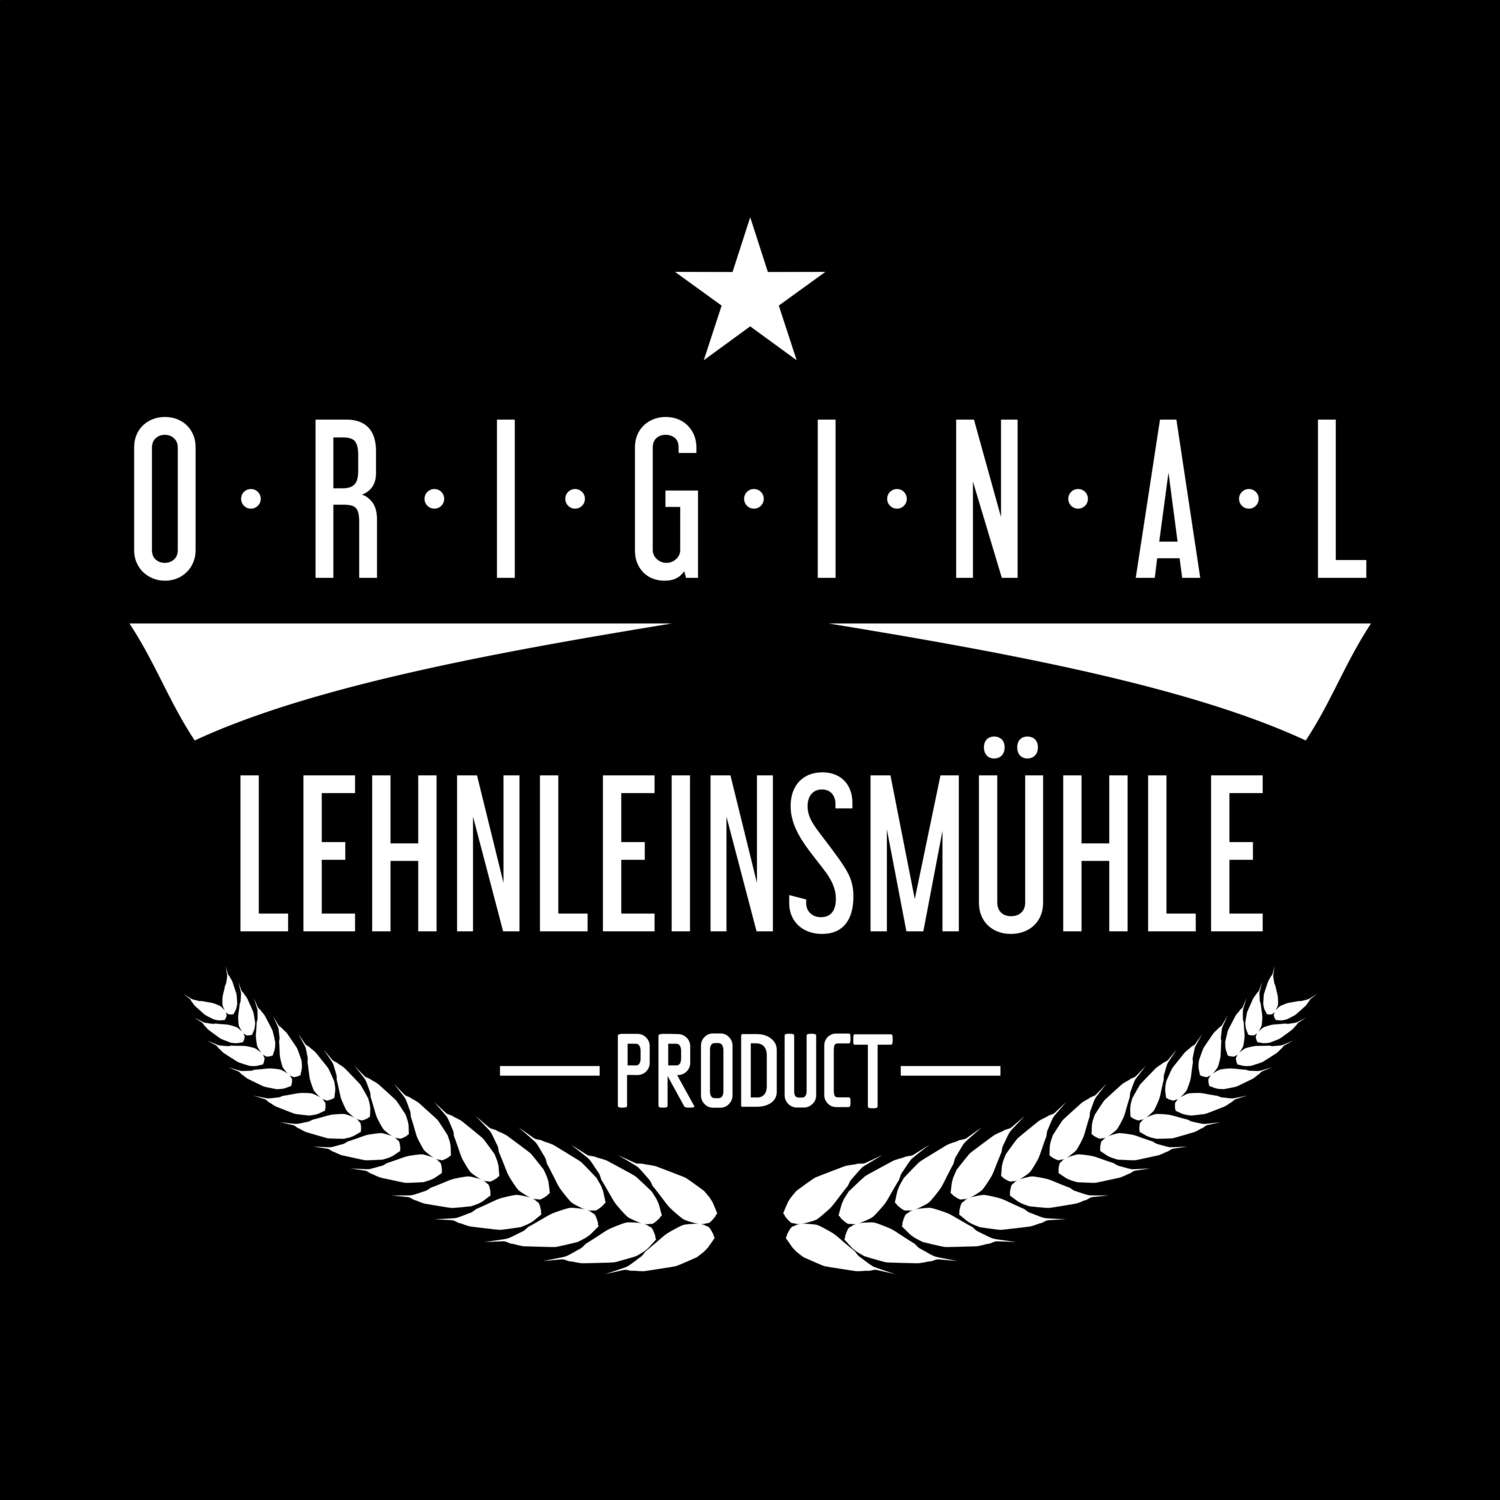 Lehnleinsmühle T-Shirt »Original Product«